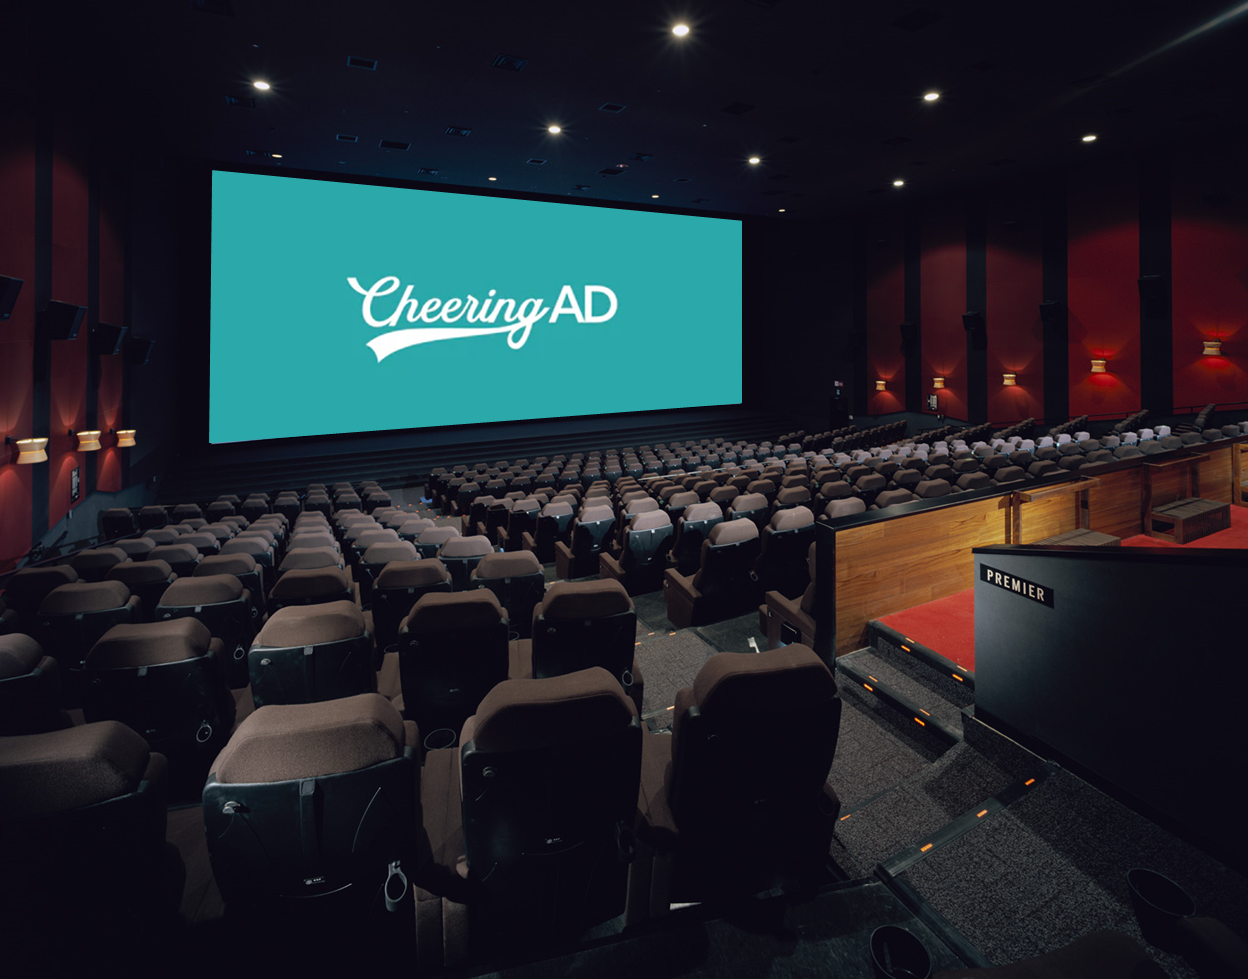 UN -A -AGEND CINEMA Intermonment Advertising 4 주 30 초 (사본)